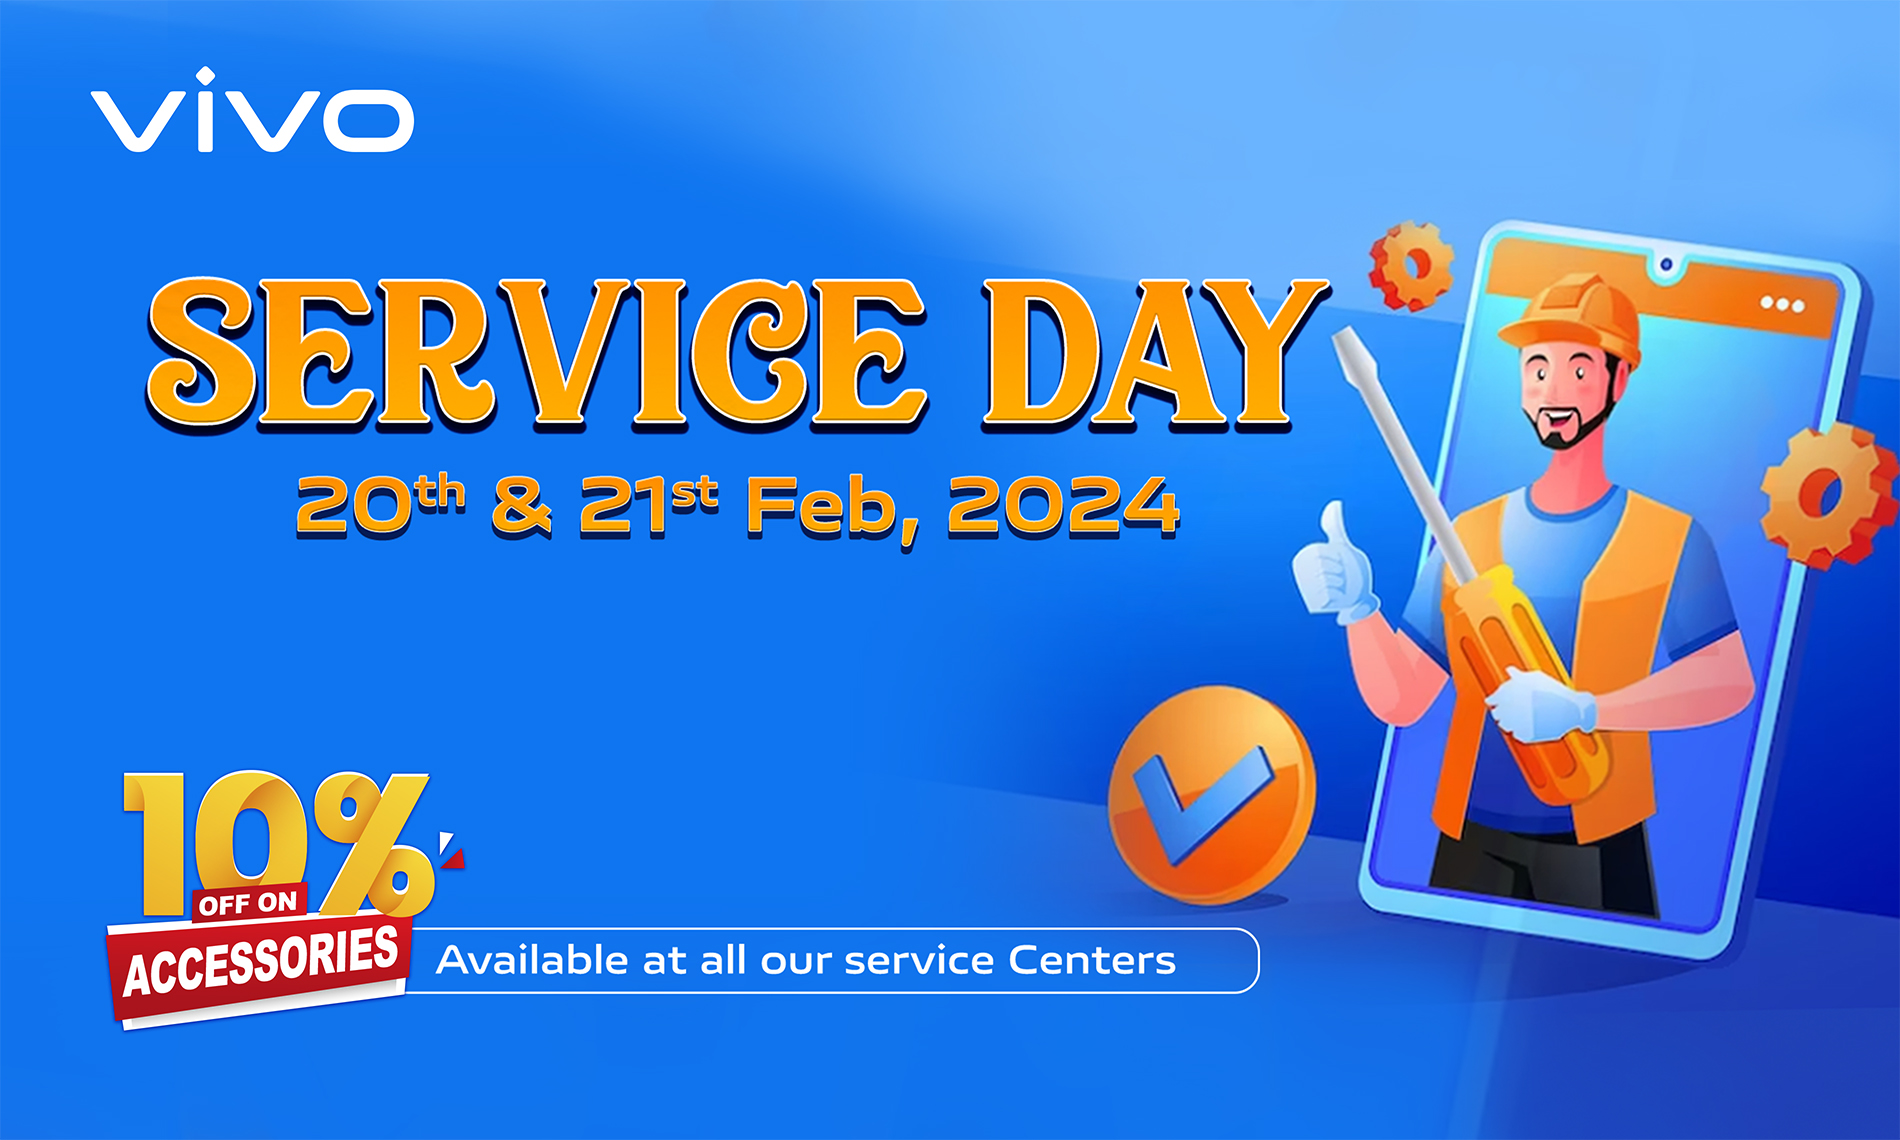 Enjoy vivo Service Day in February